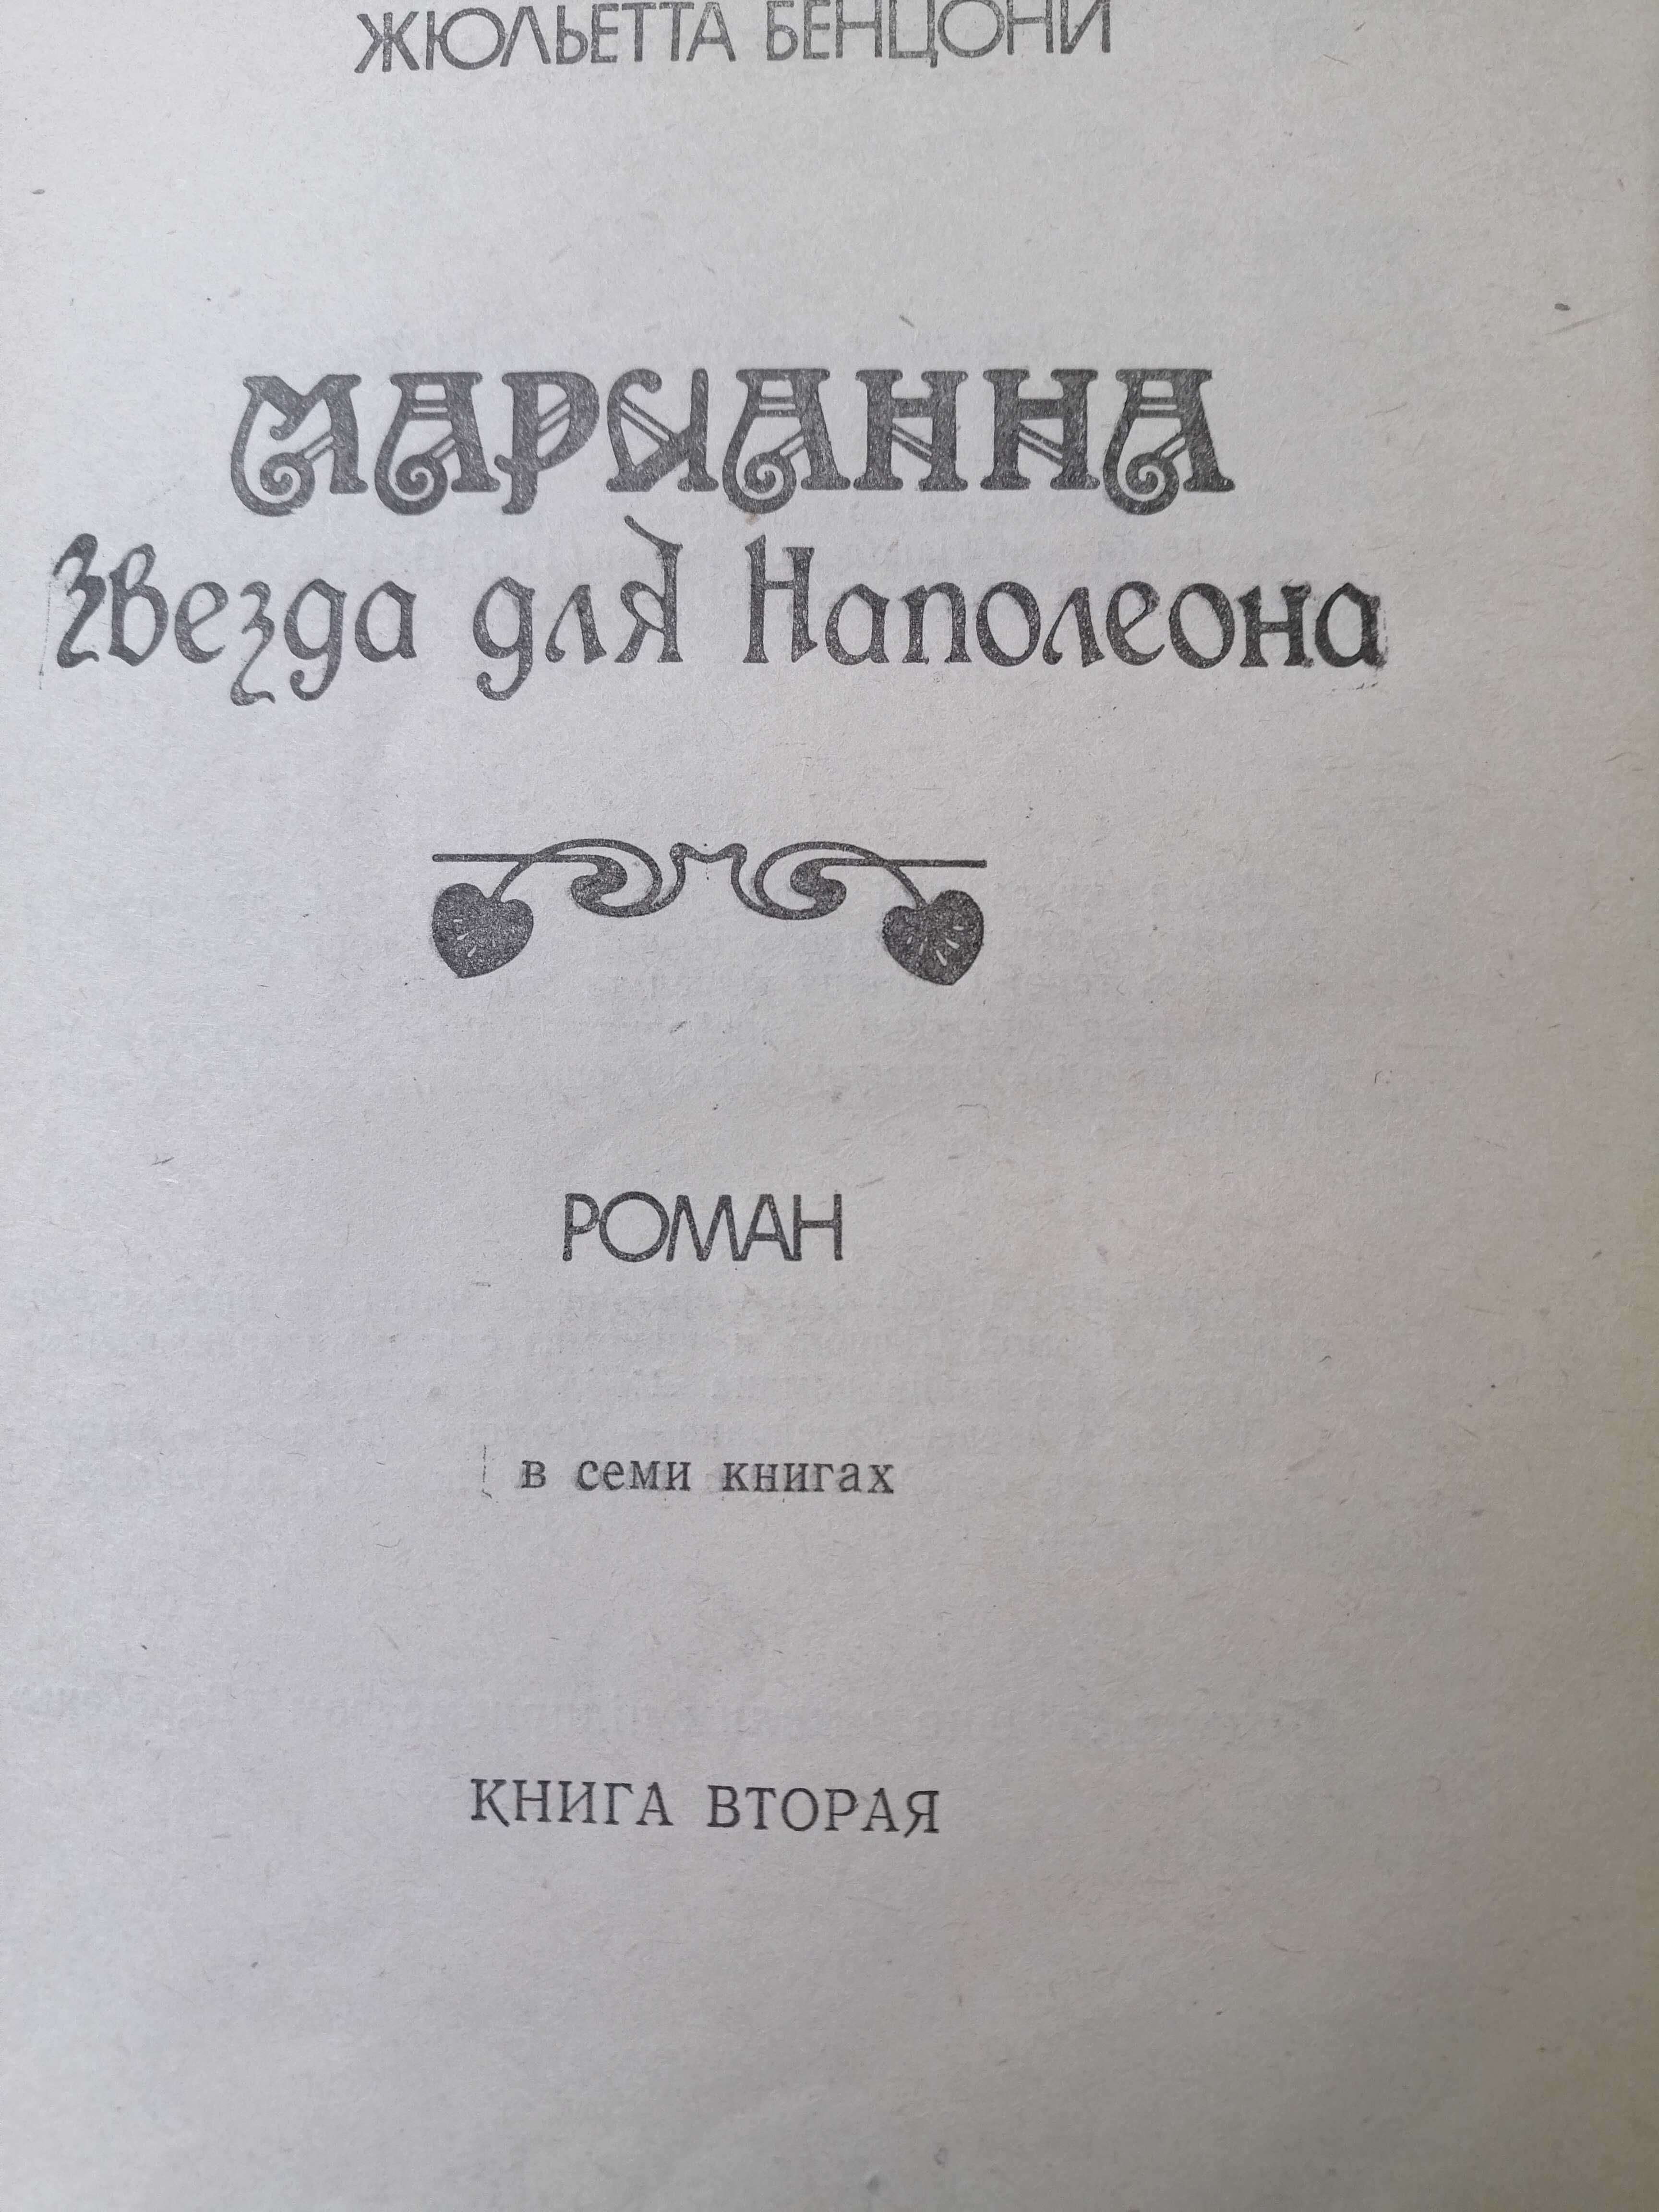 Жюльетта Бенцони "Марианна" (8 книг)